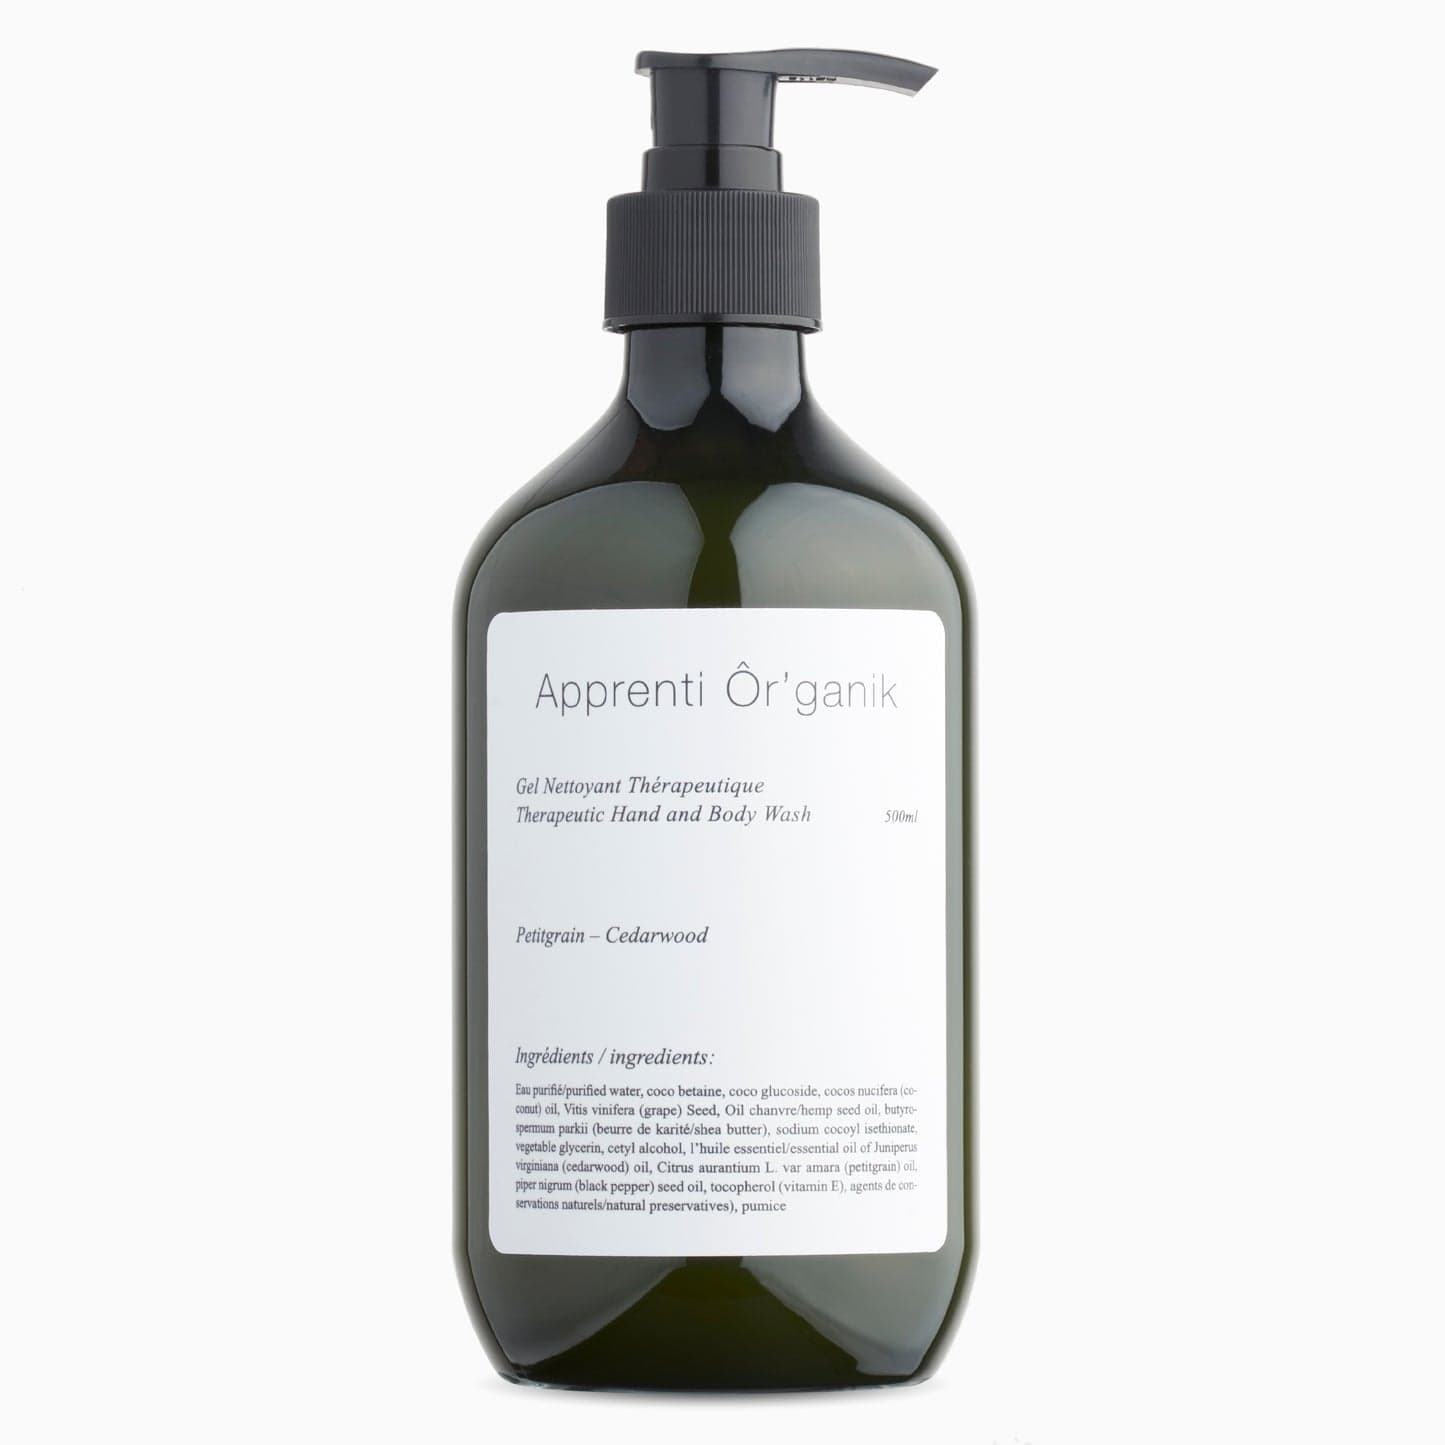 Apprenti Organik Facial Oils Apprenti Organik, Cedarwood Hand and Body Wash, made in Quebec